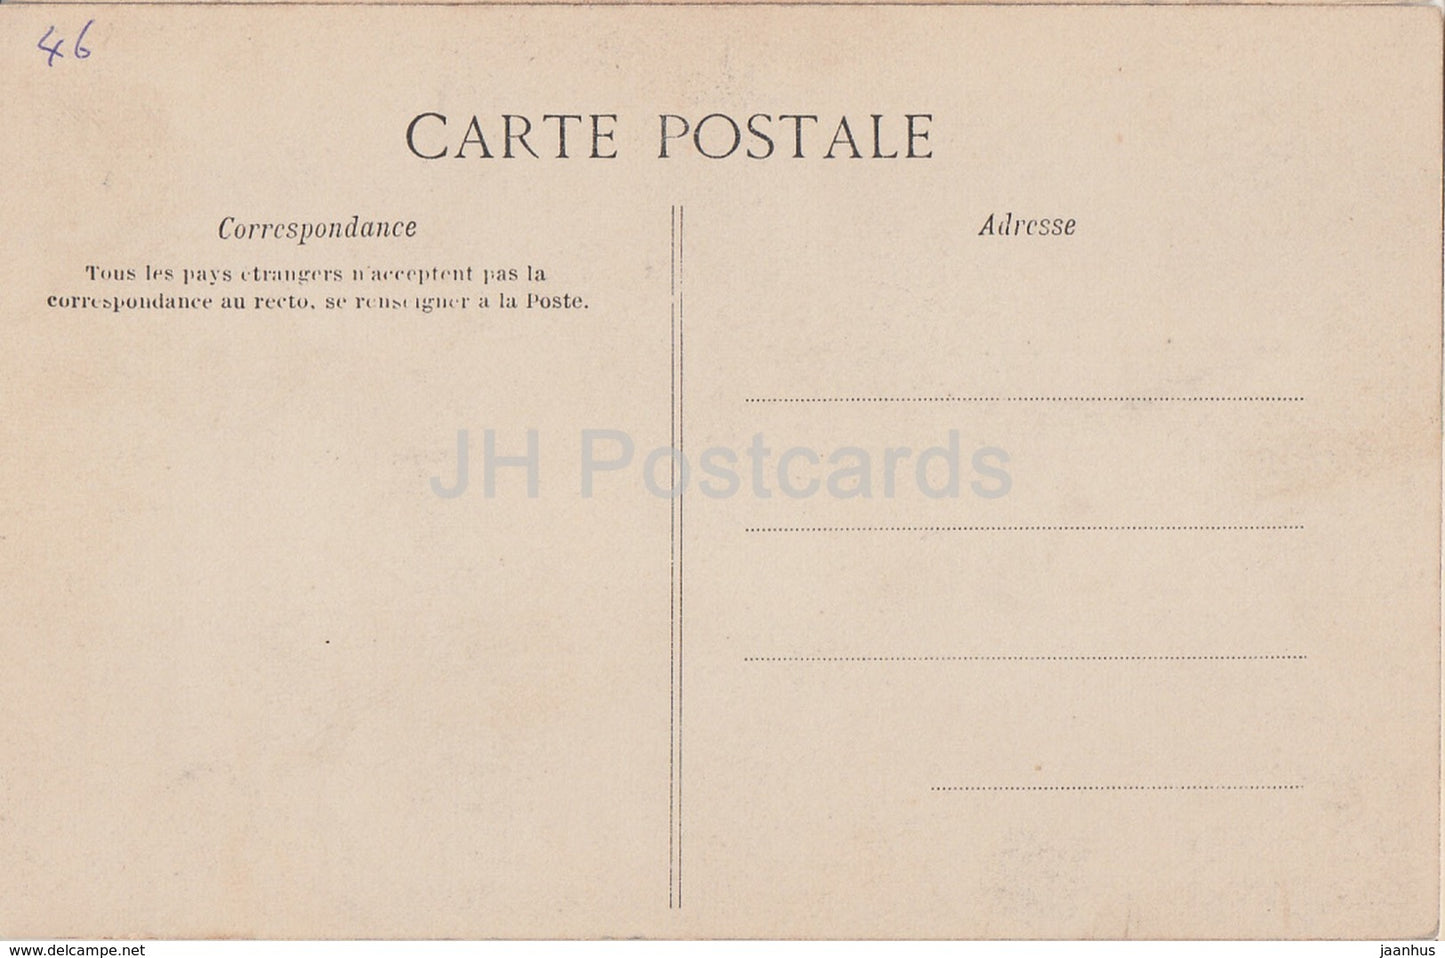 Le Lot Illustre - Betaille - Ruines du Chateau - castle ruins - old postcard - France - unused